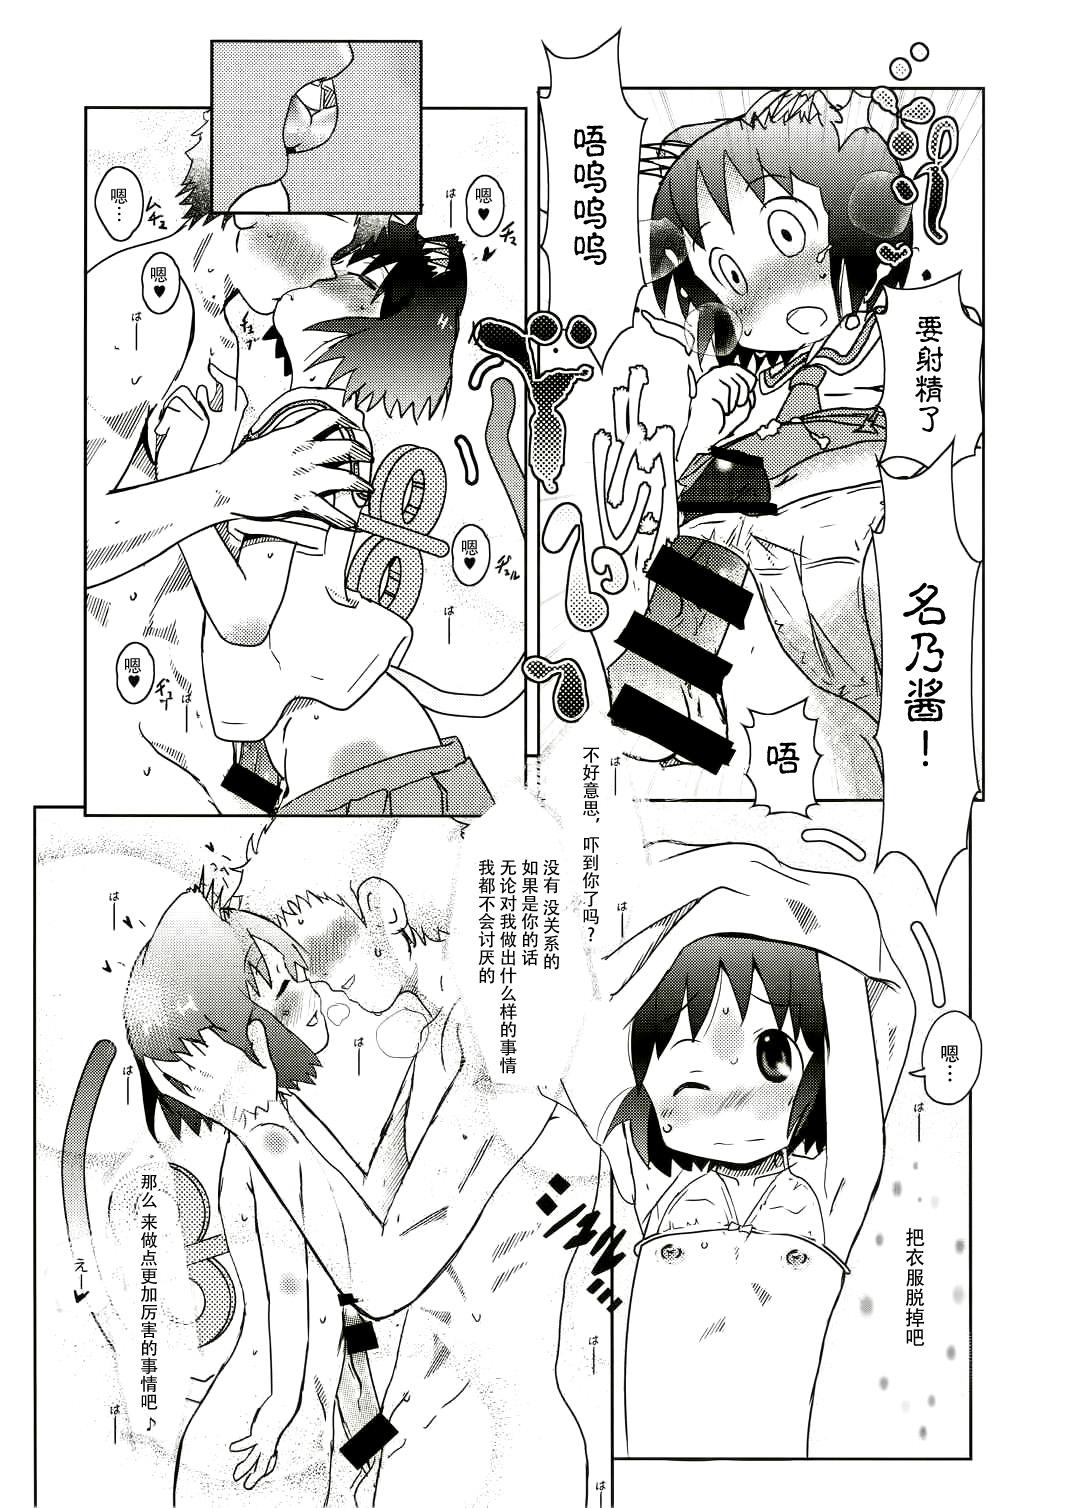 Chupada Starfish and Coffee Vol. 3 - Nichijou Chat - Page 10